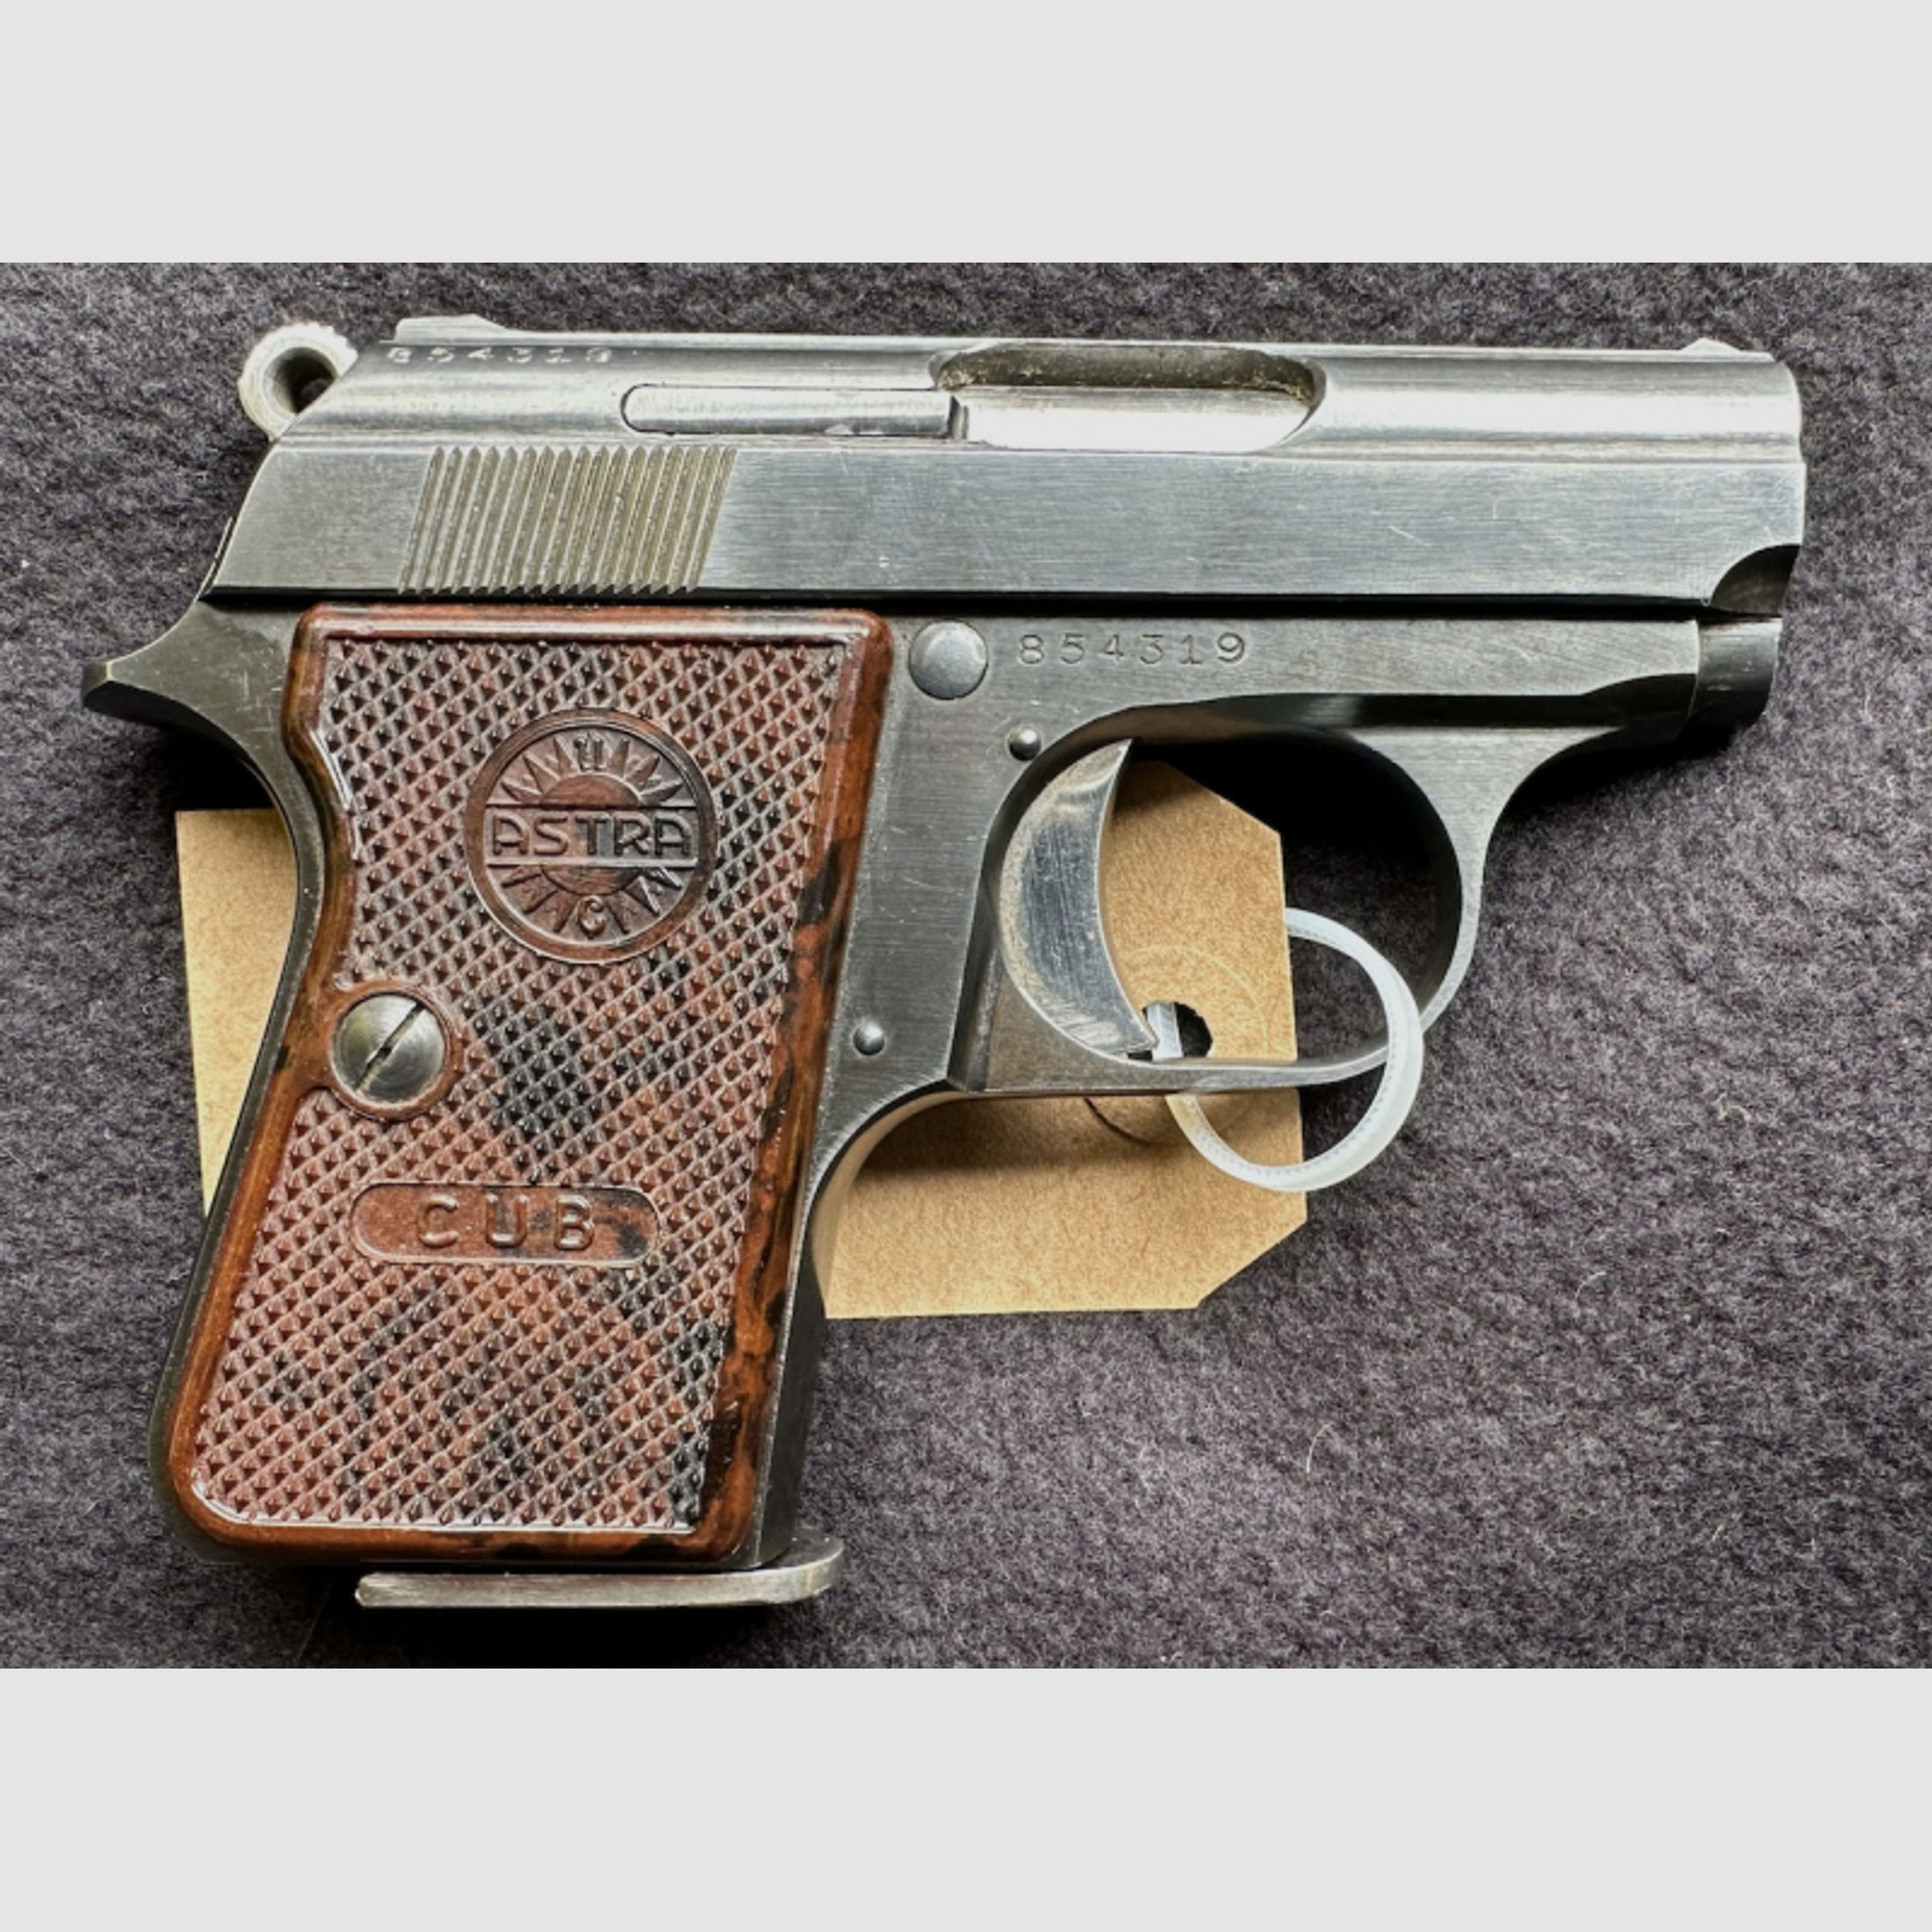 Pistole Astra CUB - 6,35 mm Browning - .25 Auto - 1 Magazin - auch nur freie Teile